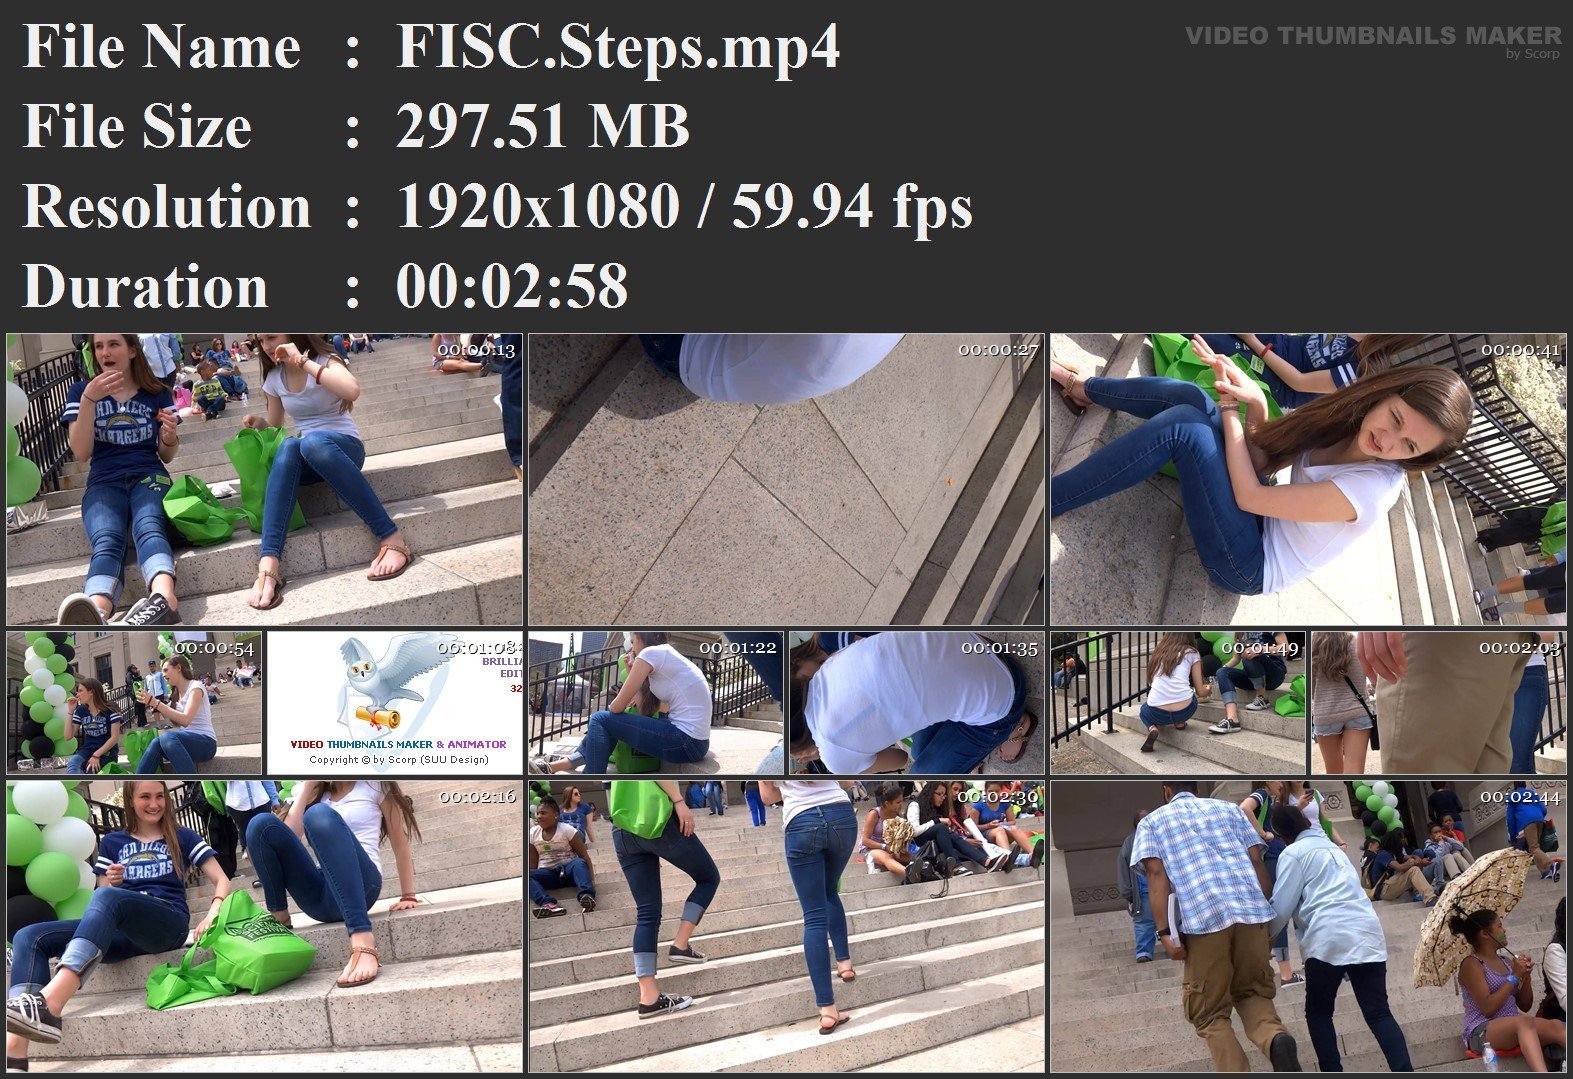 FISC.Steps.mp4.jpg